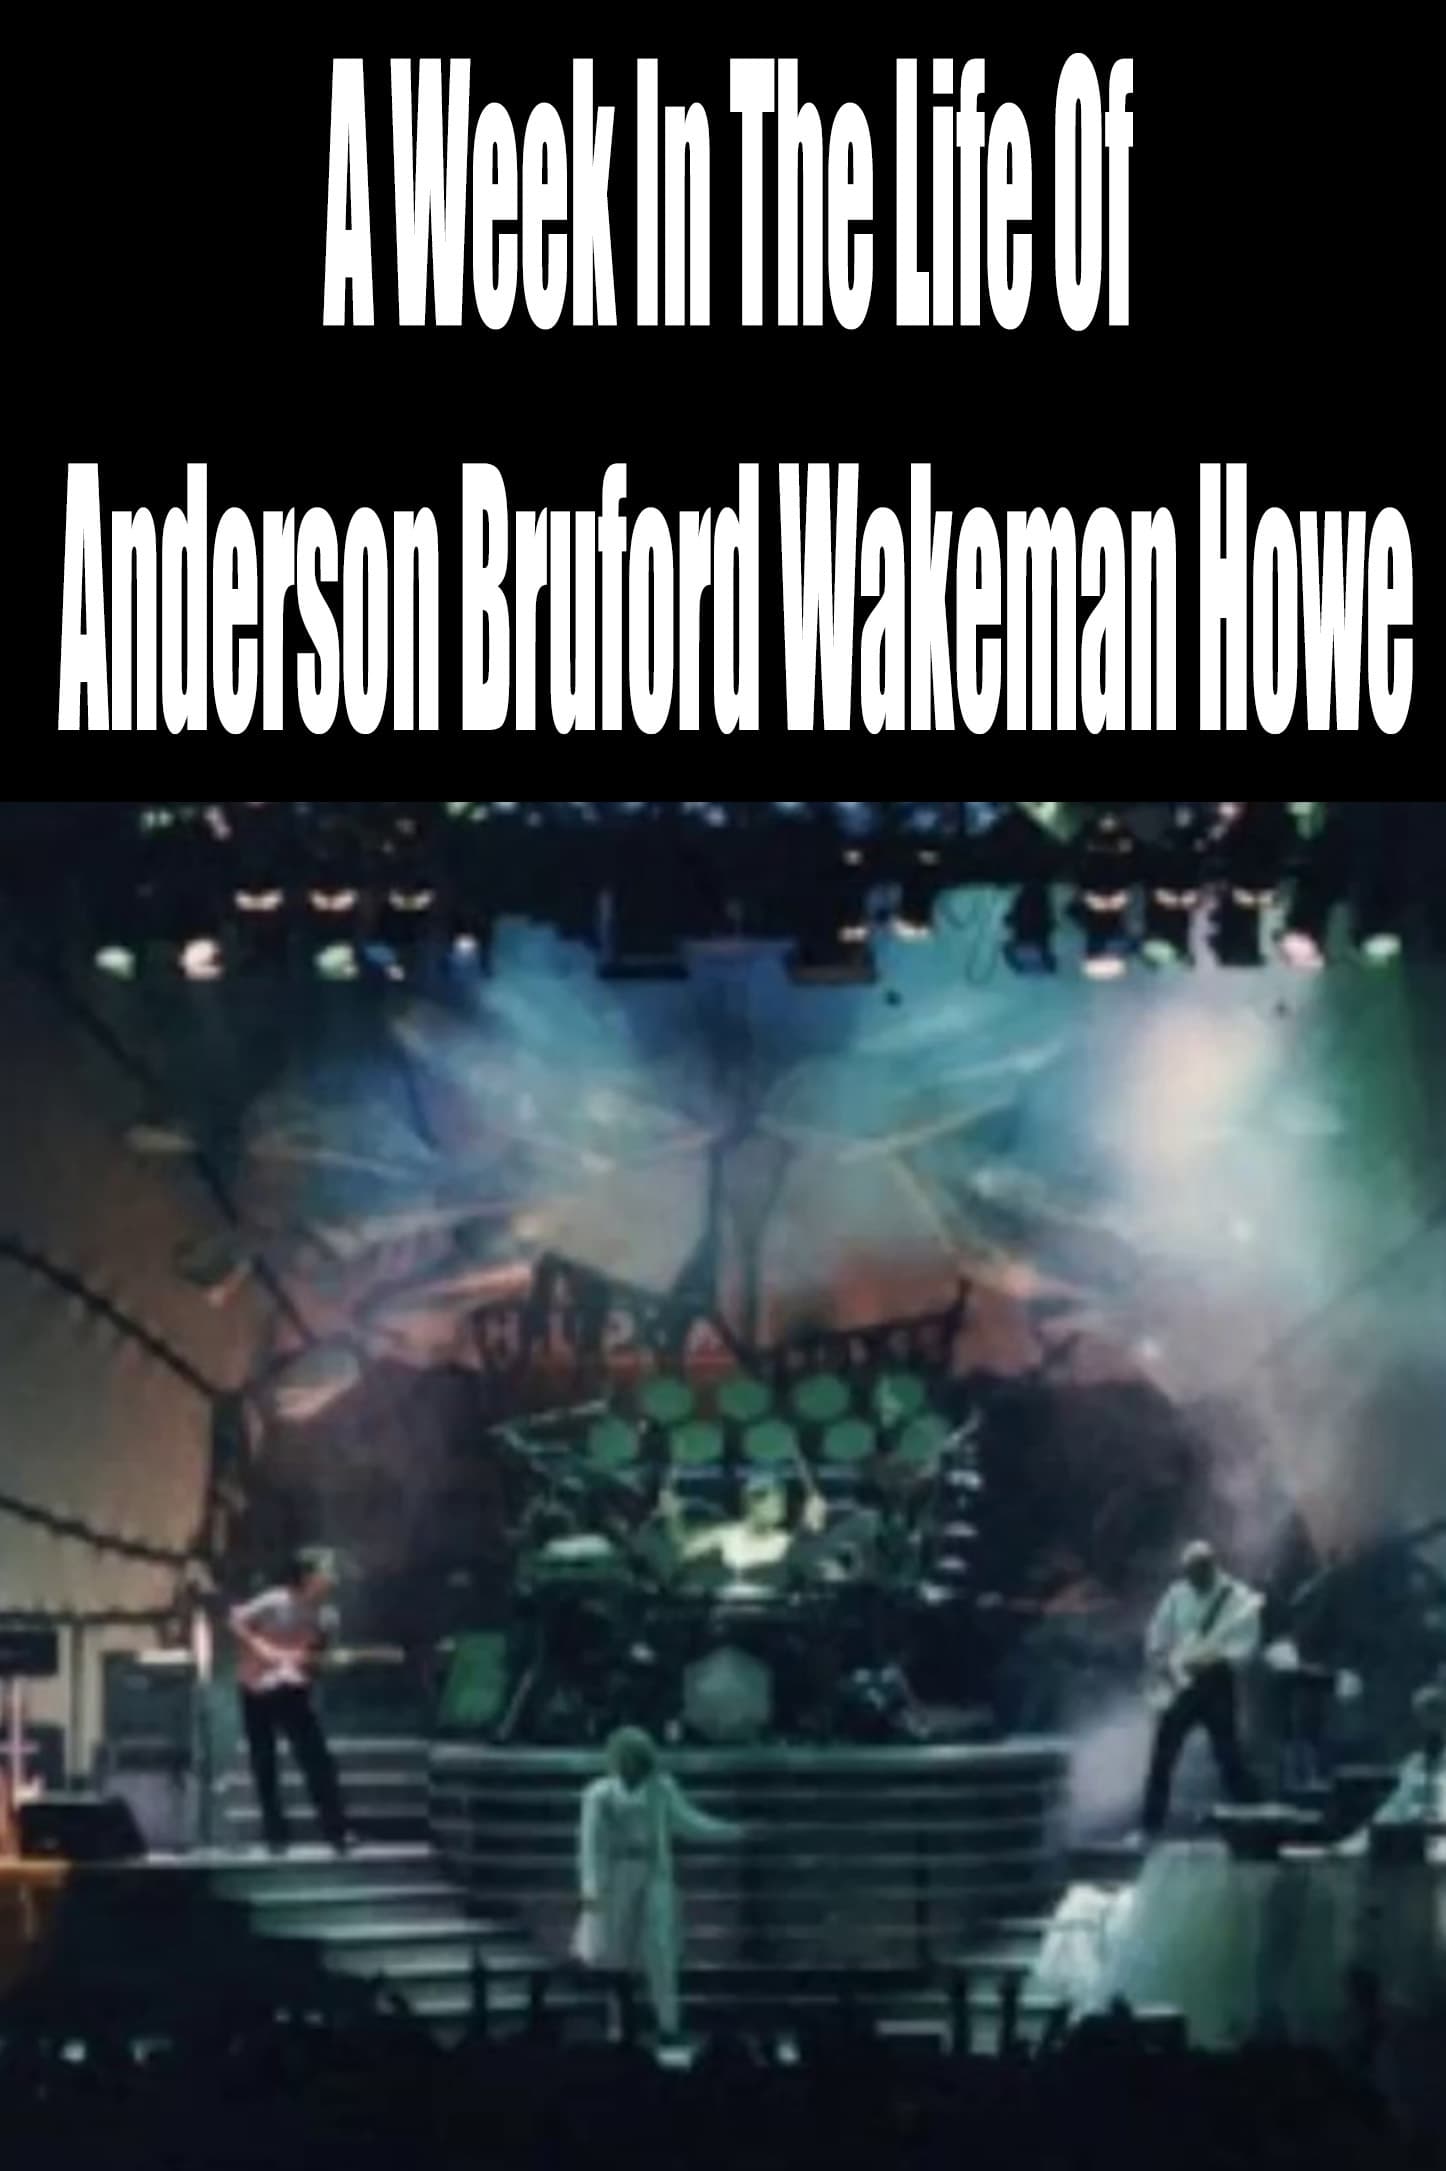 A Week In The Life Of Anderson Bruford Wakeman Howe